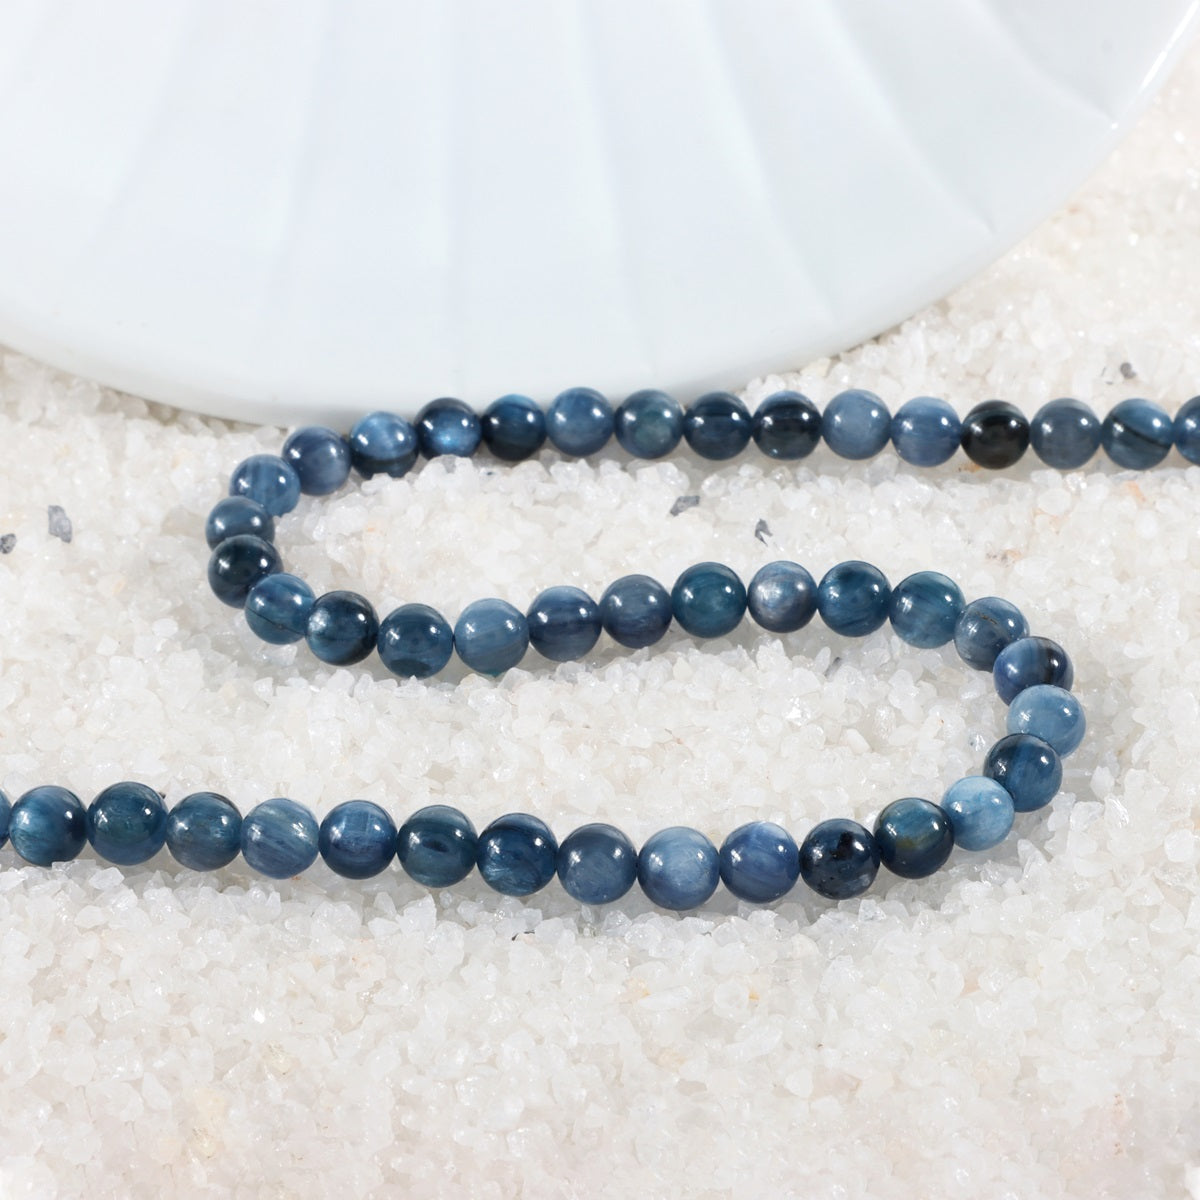 Healing Crystal Necklace - Harmonizing and Balancing Kyanite